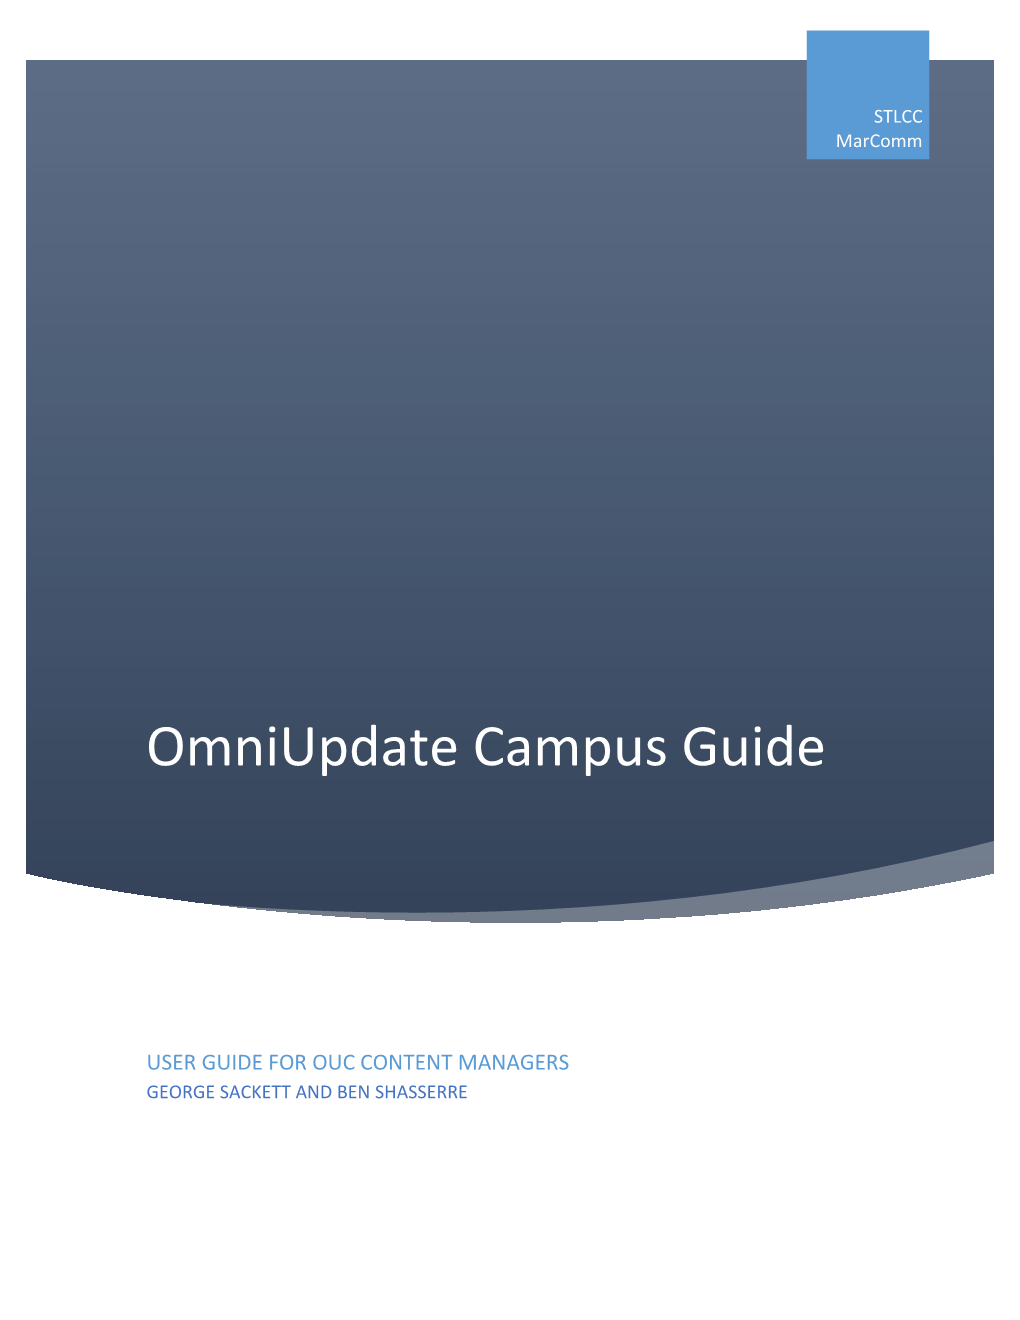 Omniupdate Campus Guide